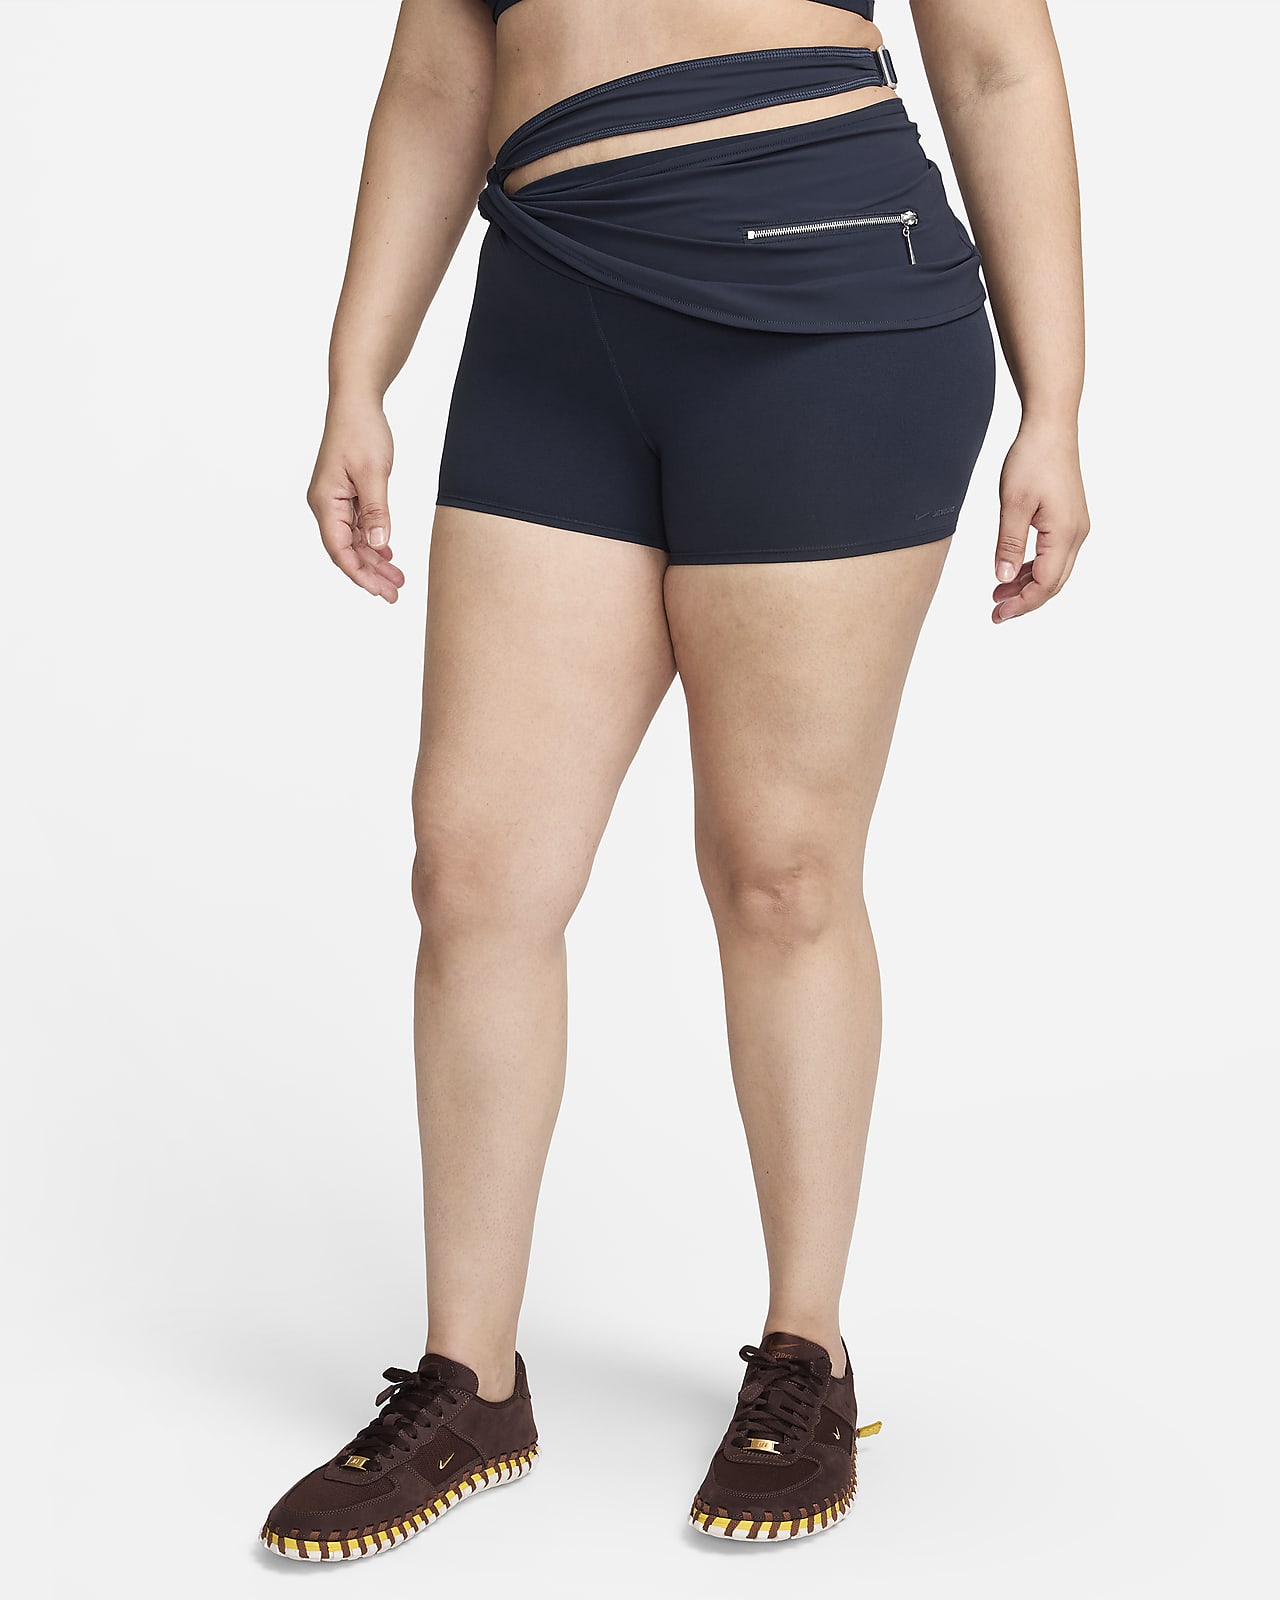 Lagdelte Nike x Jacquemus-shorts til kvinder